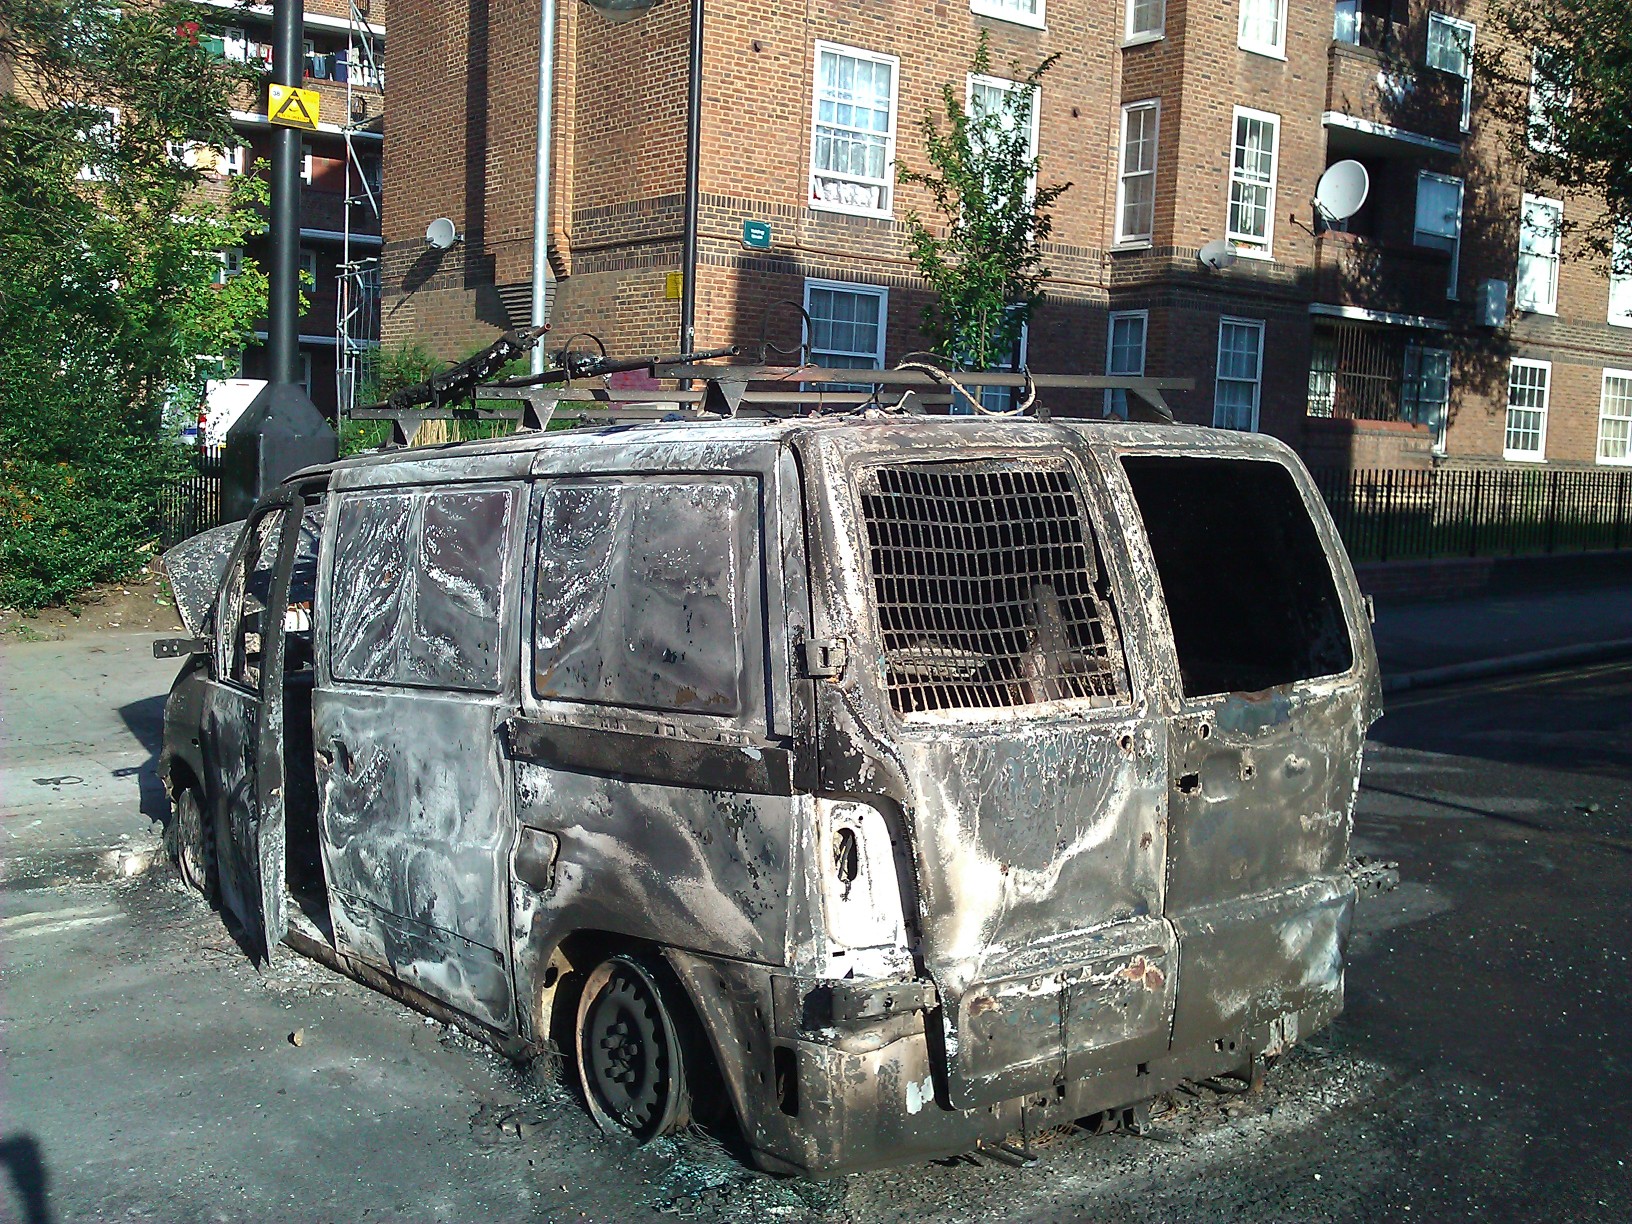 File:Burnt out van, Hackney riots 2011.jpg - Wikimedia Commons